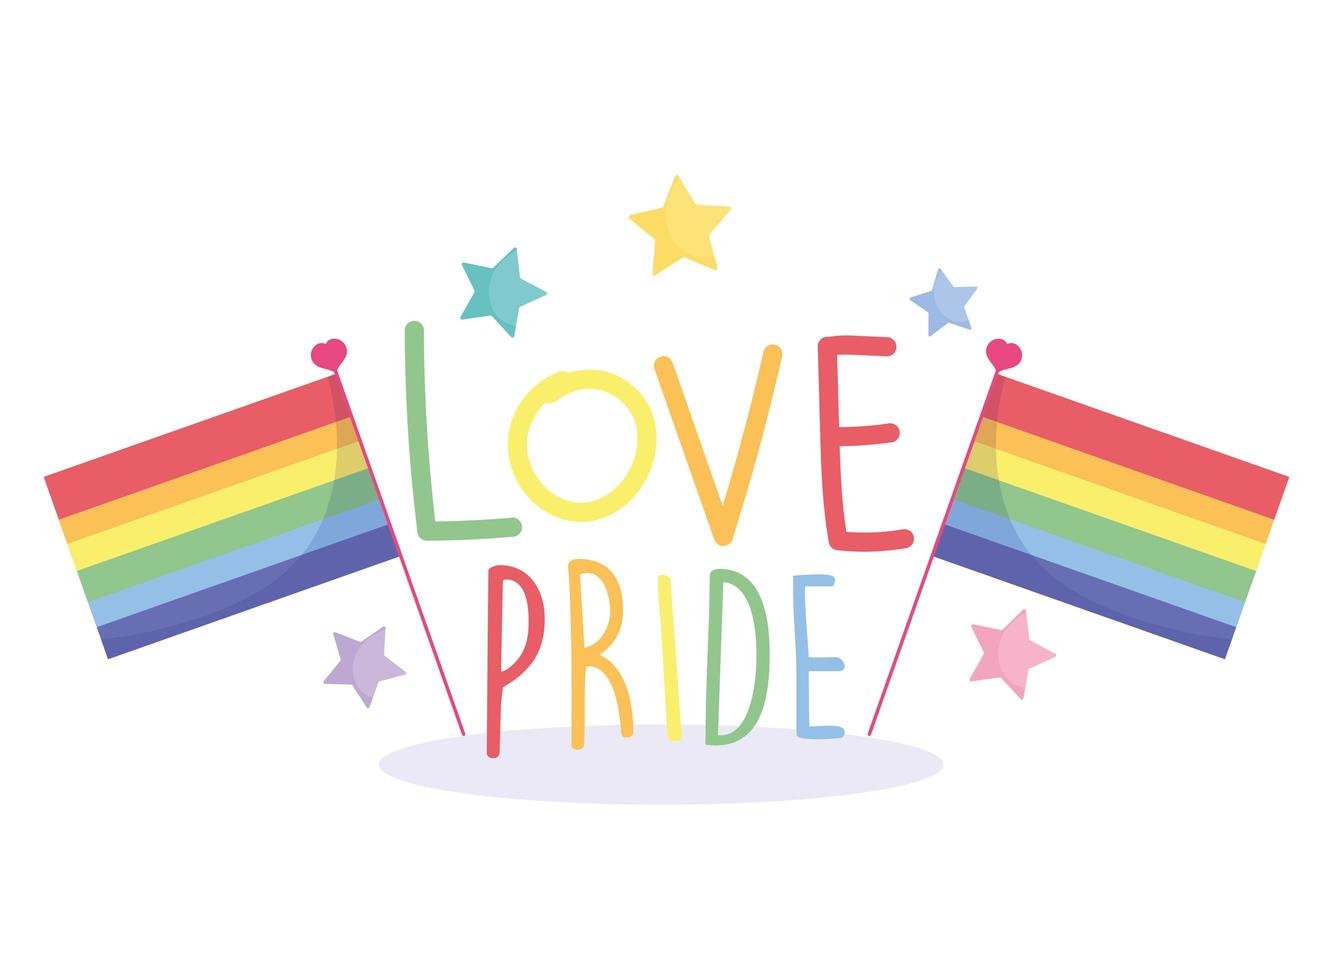 Happy pride day, rainbow flags, stars celebration design vector